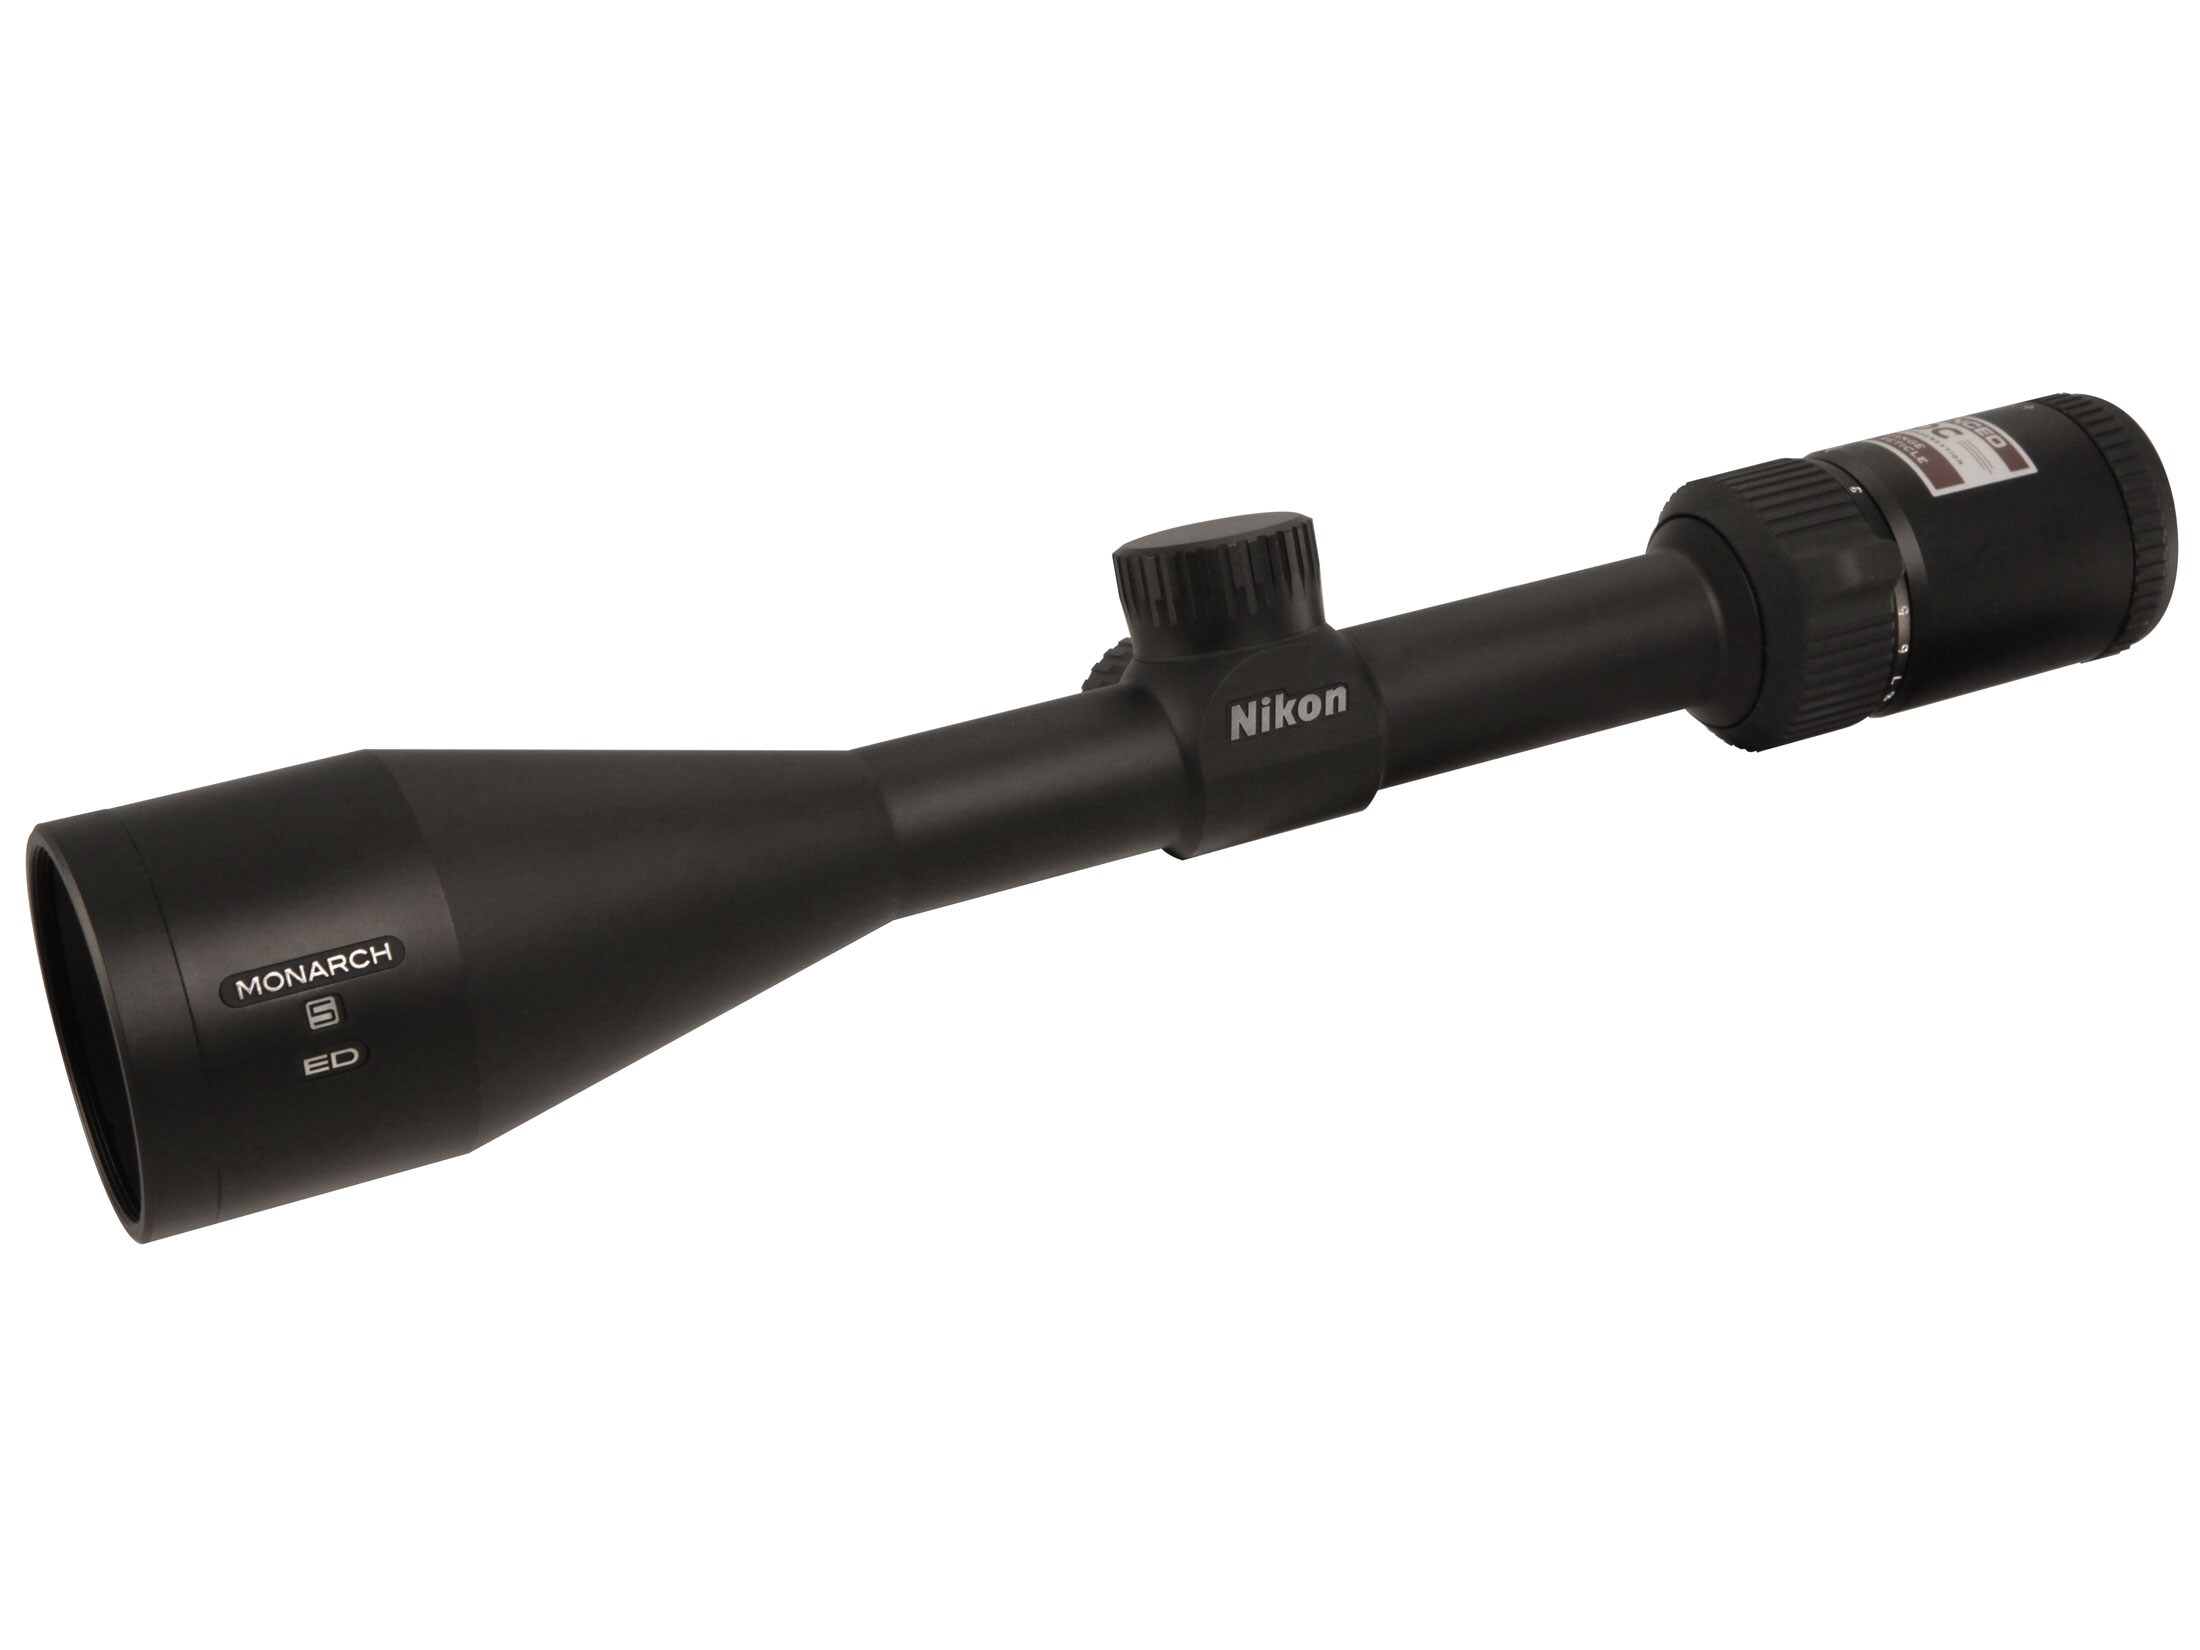 Nikon MONARCH 5 ED Rifle Scope 1 Tube 2-10x50mm Advanced BDC Reticle